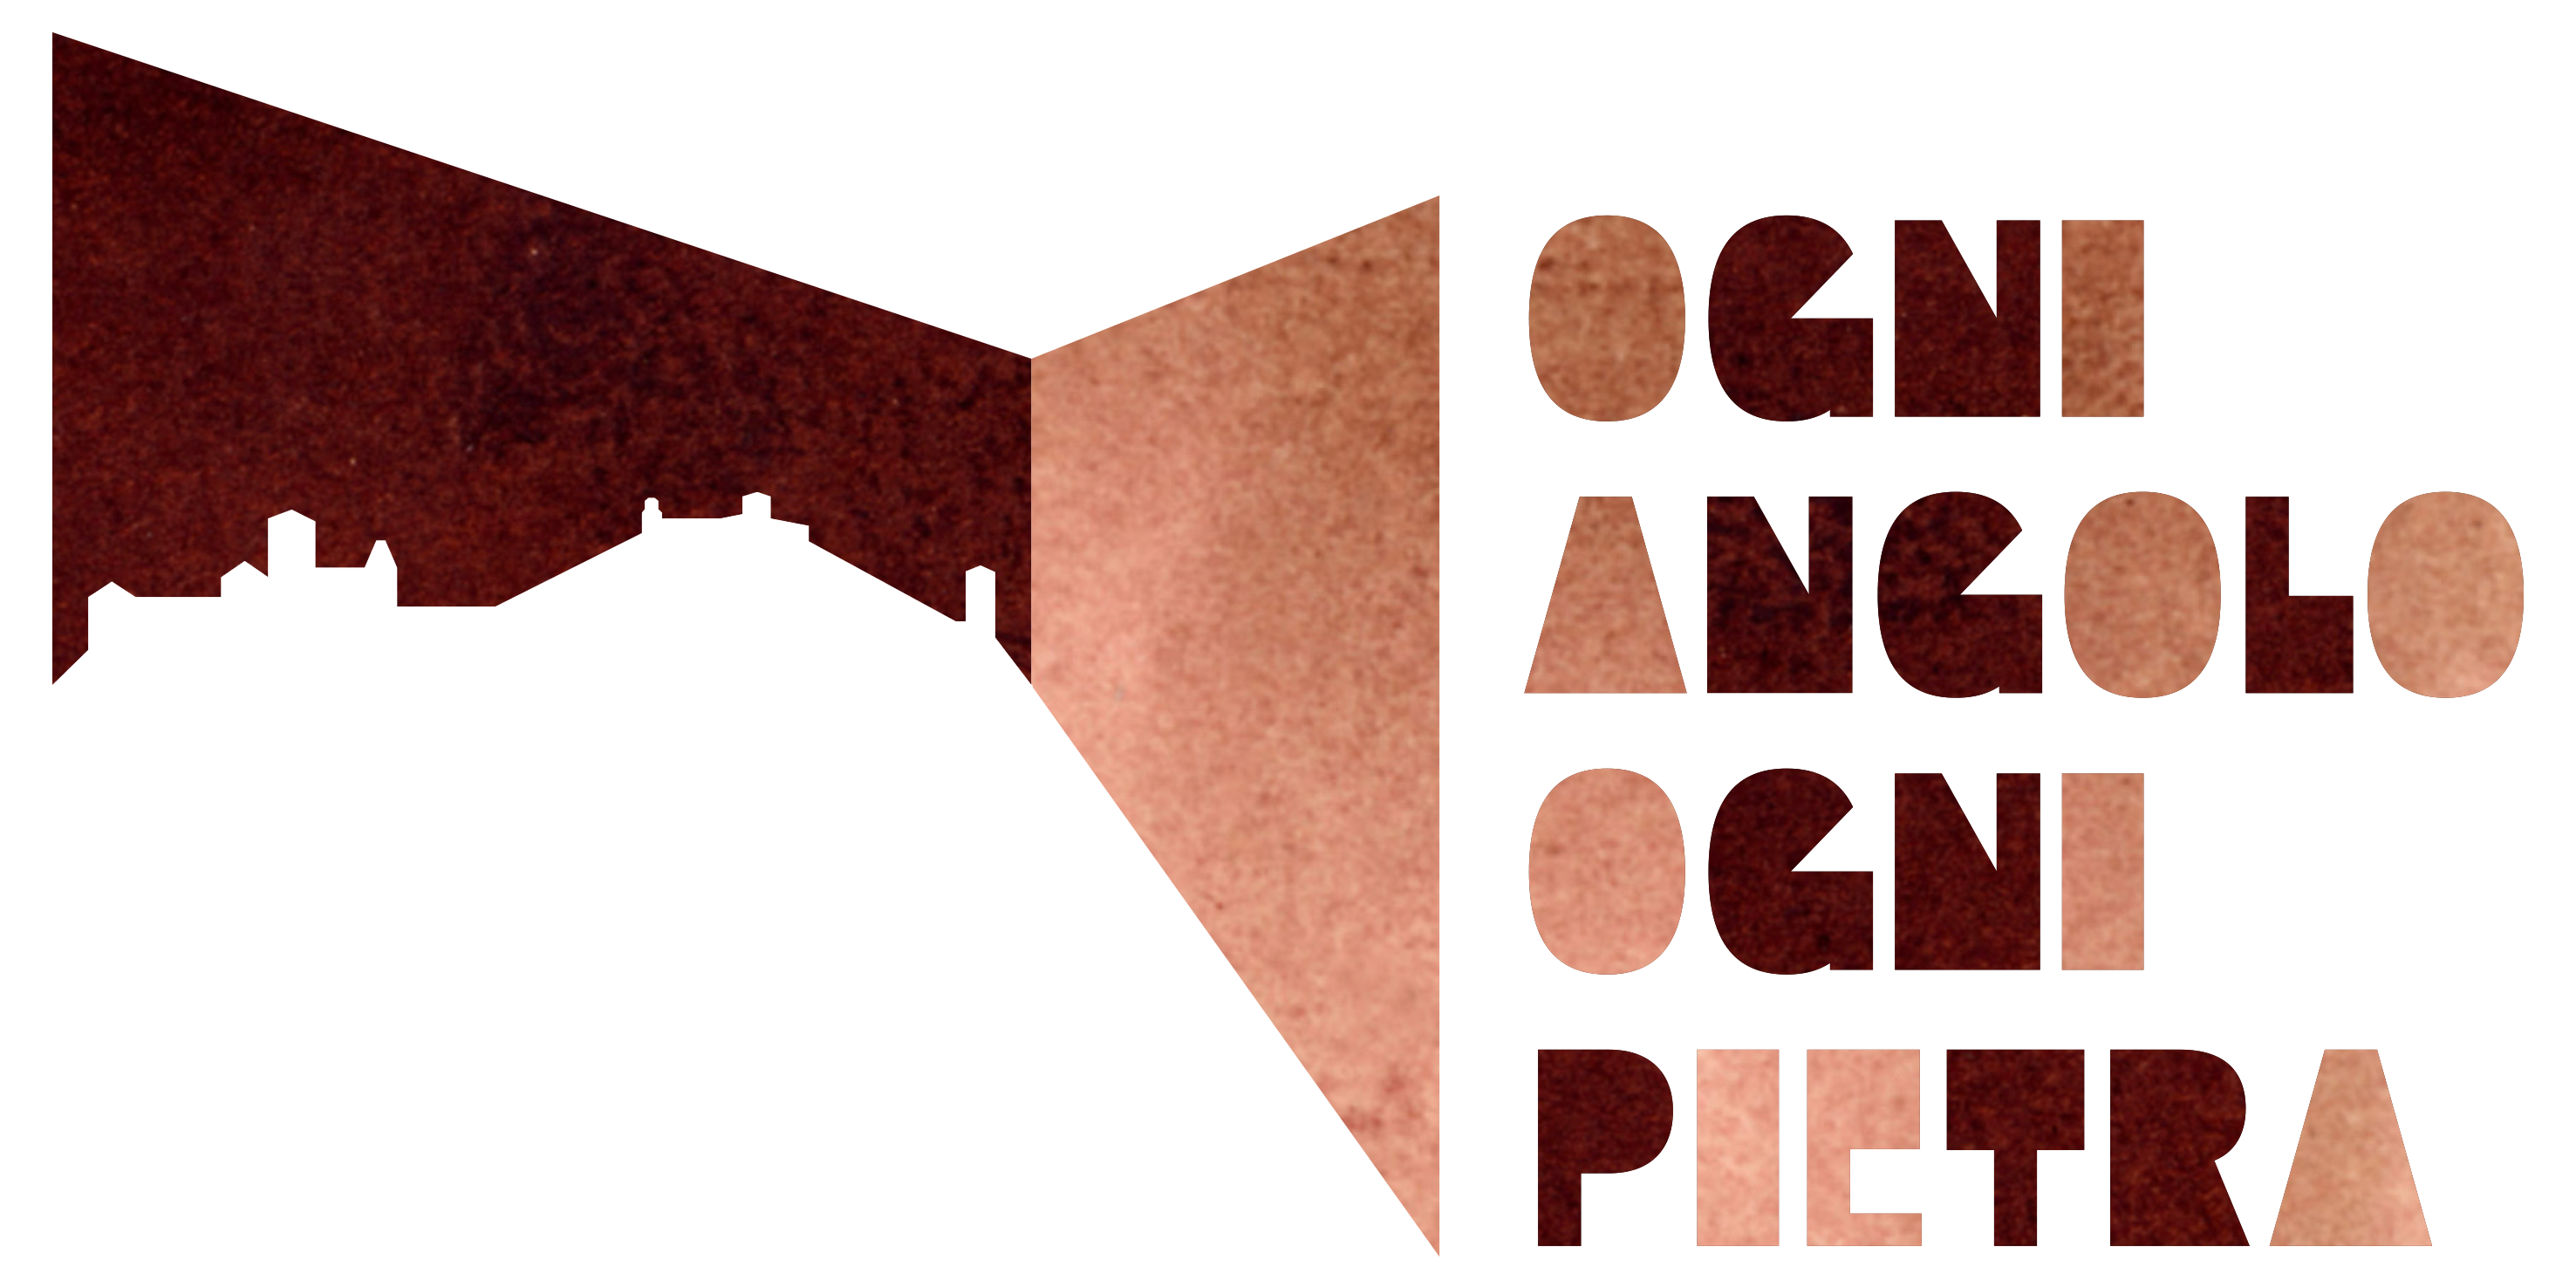 http://www.ogniangoloognipietra.it/wp-content/uploads/2021/08/Logo-OAOP.png